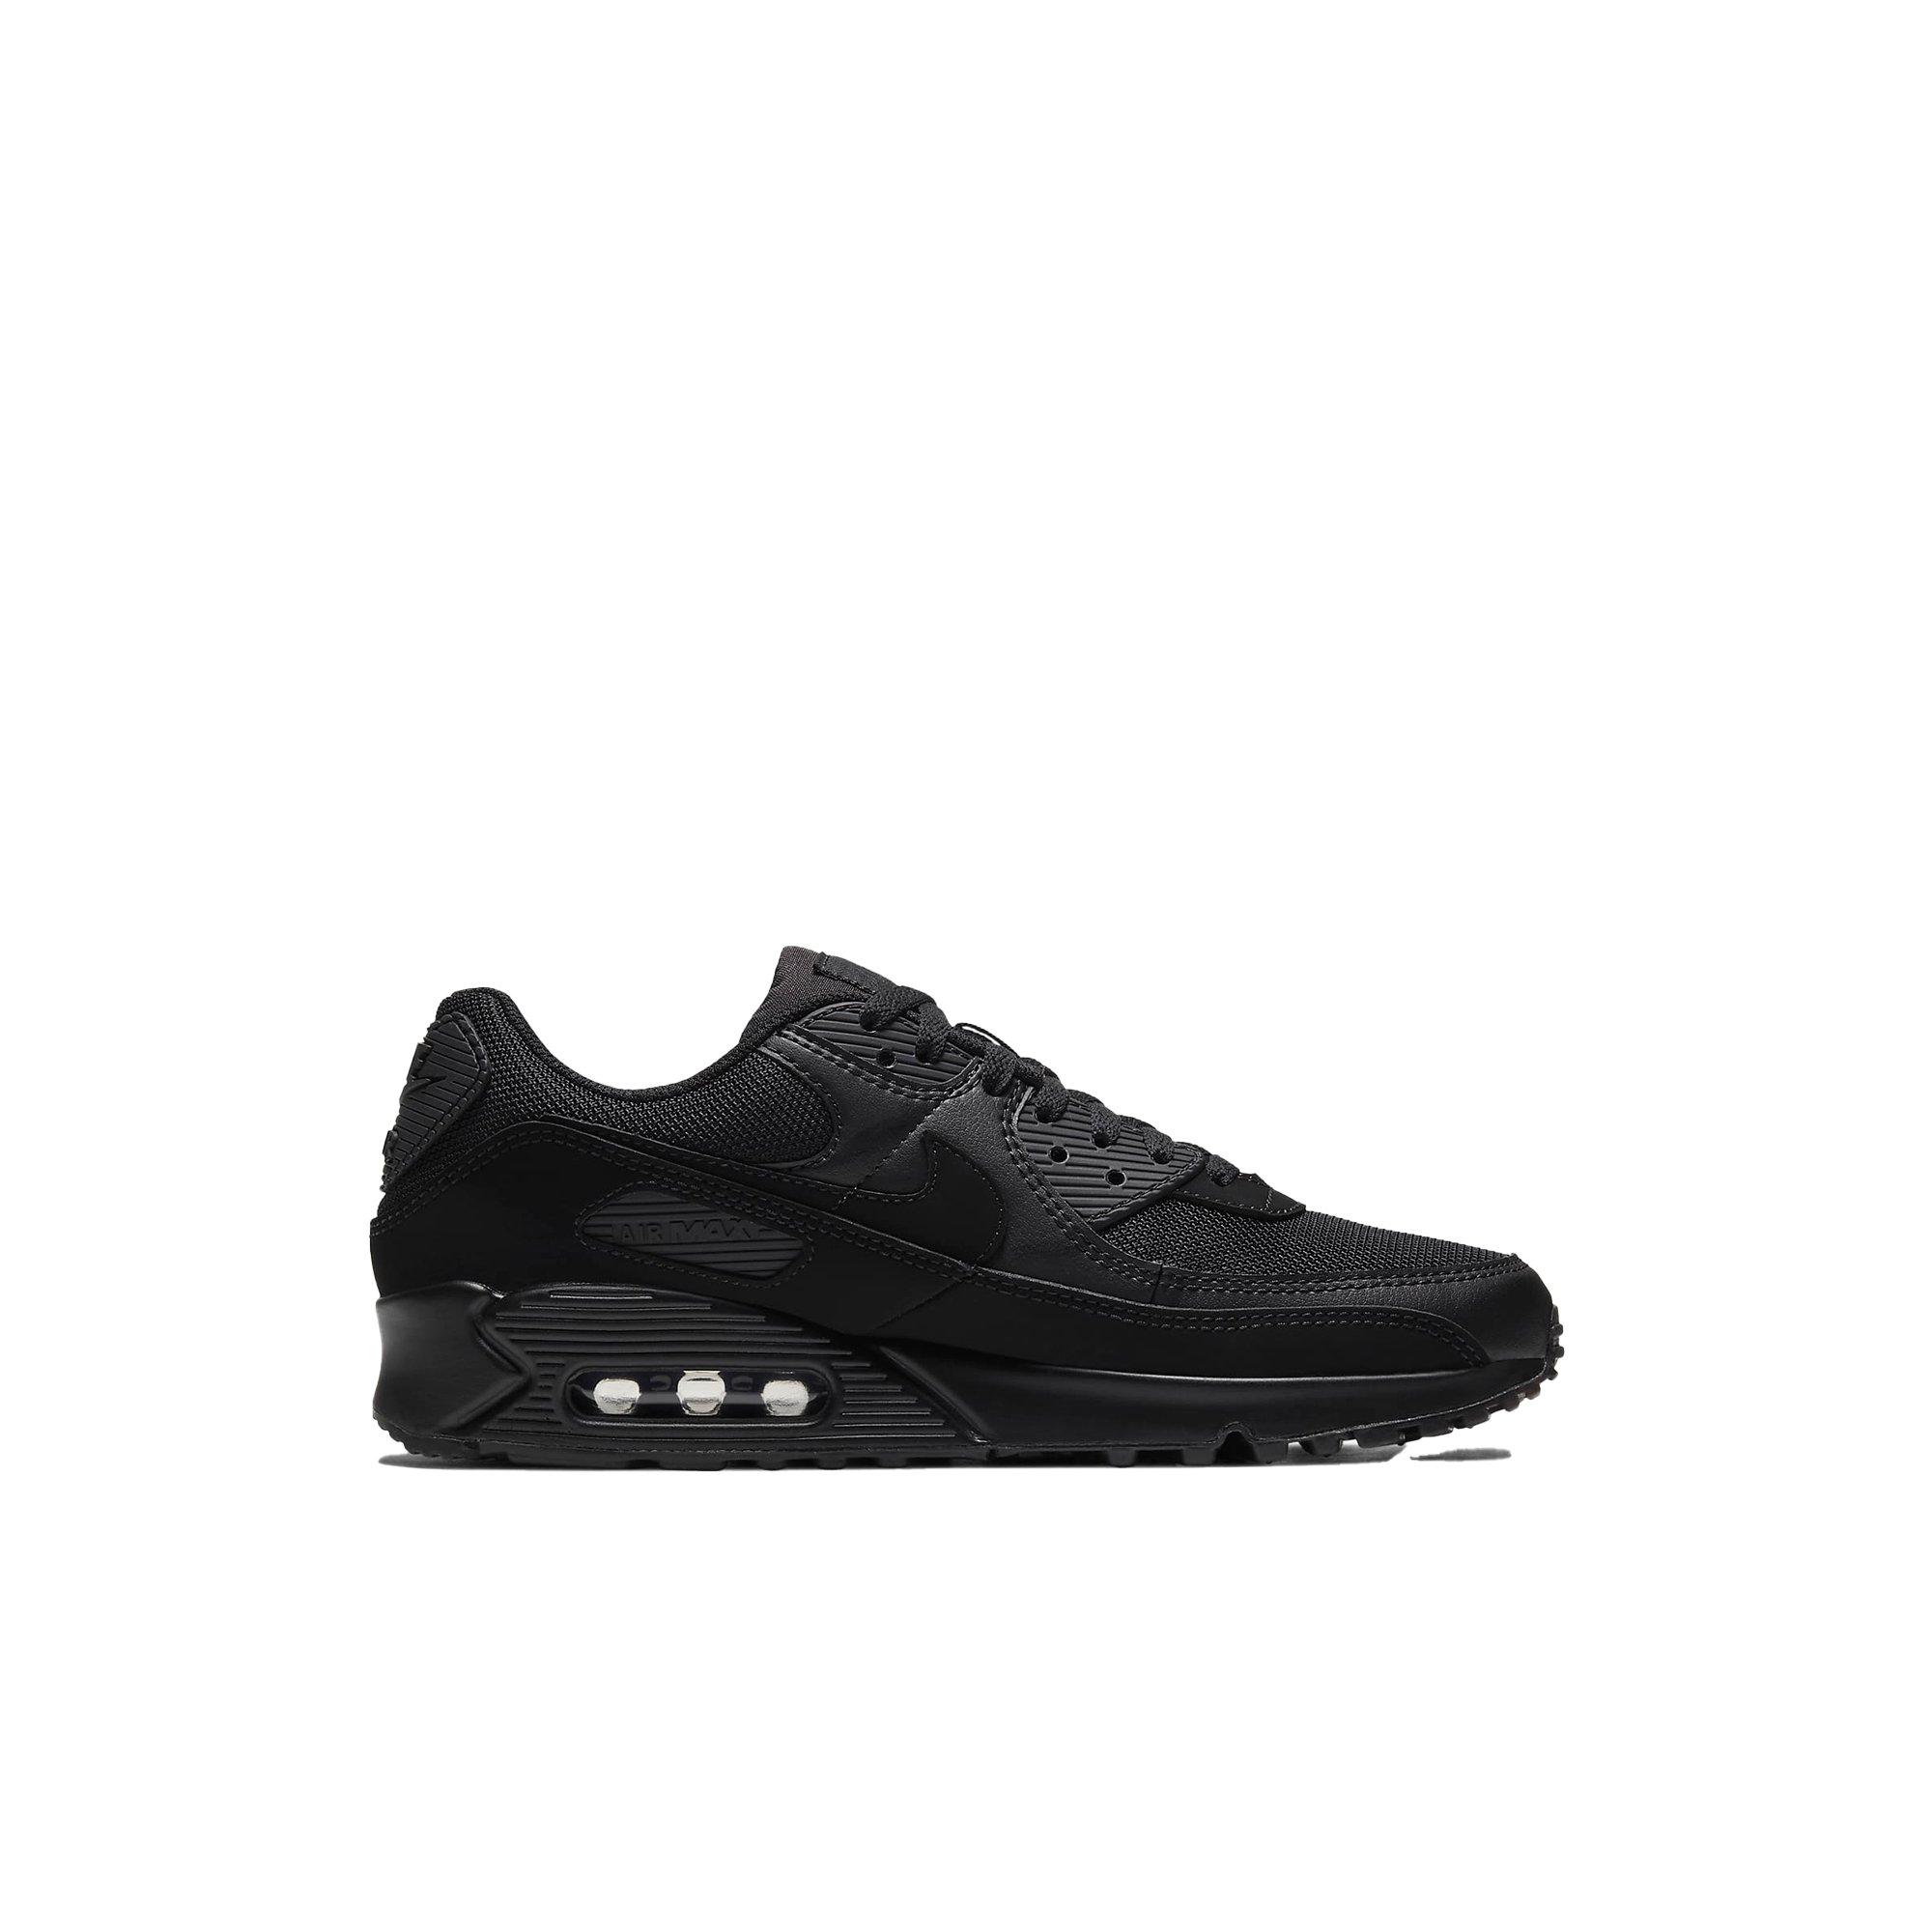 Nike Air Max 90 "Black" Mesh Shoe